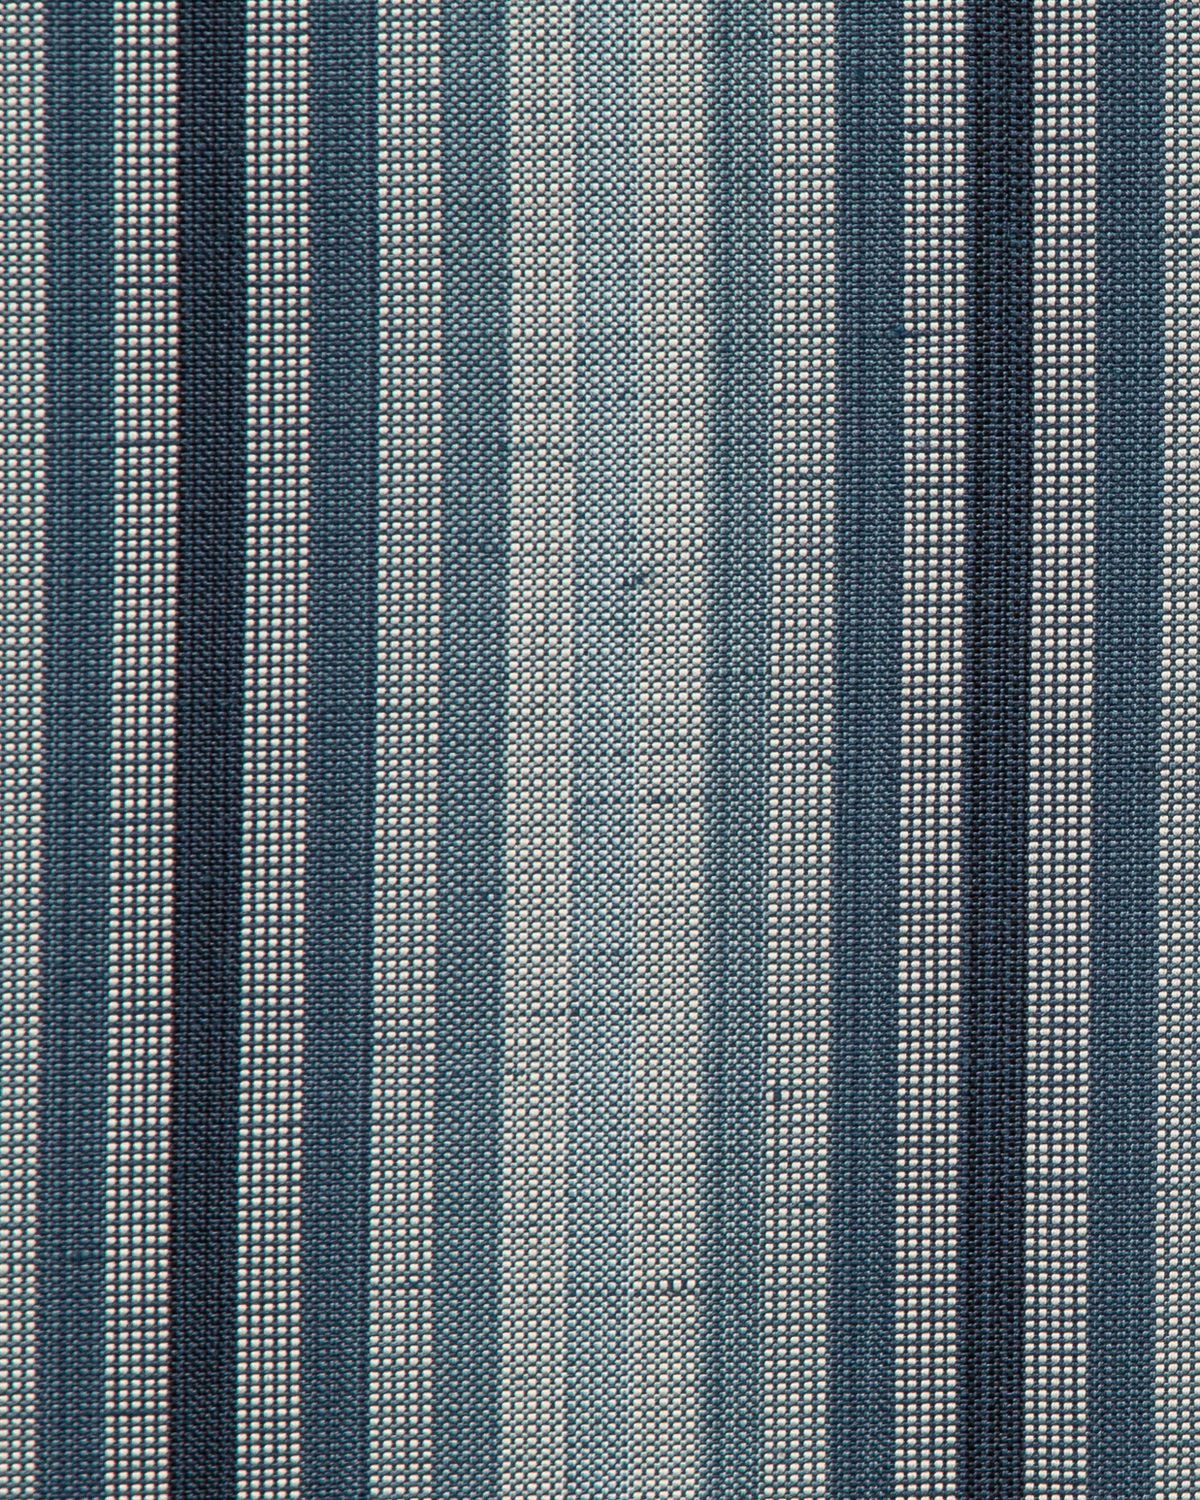 Ombré Stripe Fabric in Sea Blues